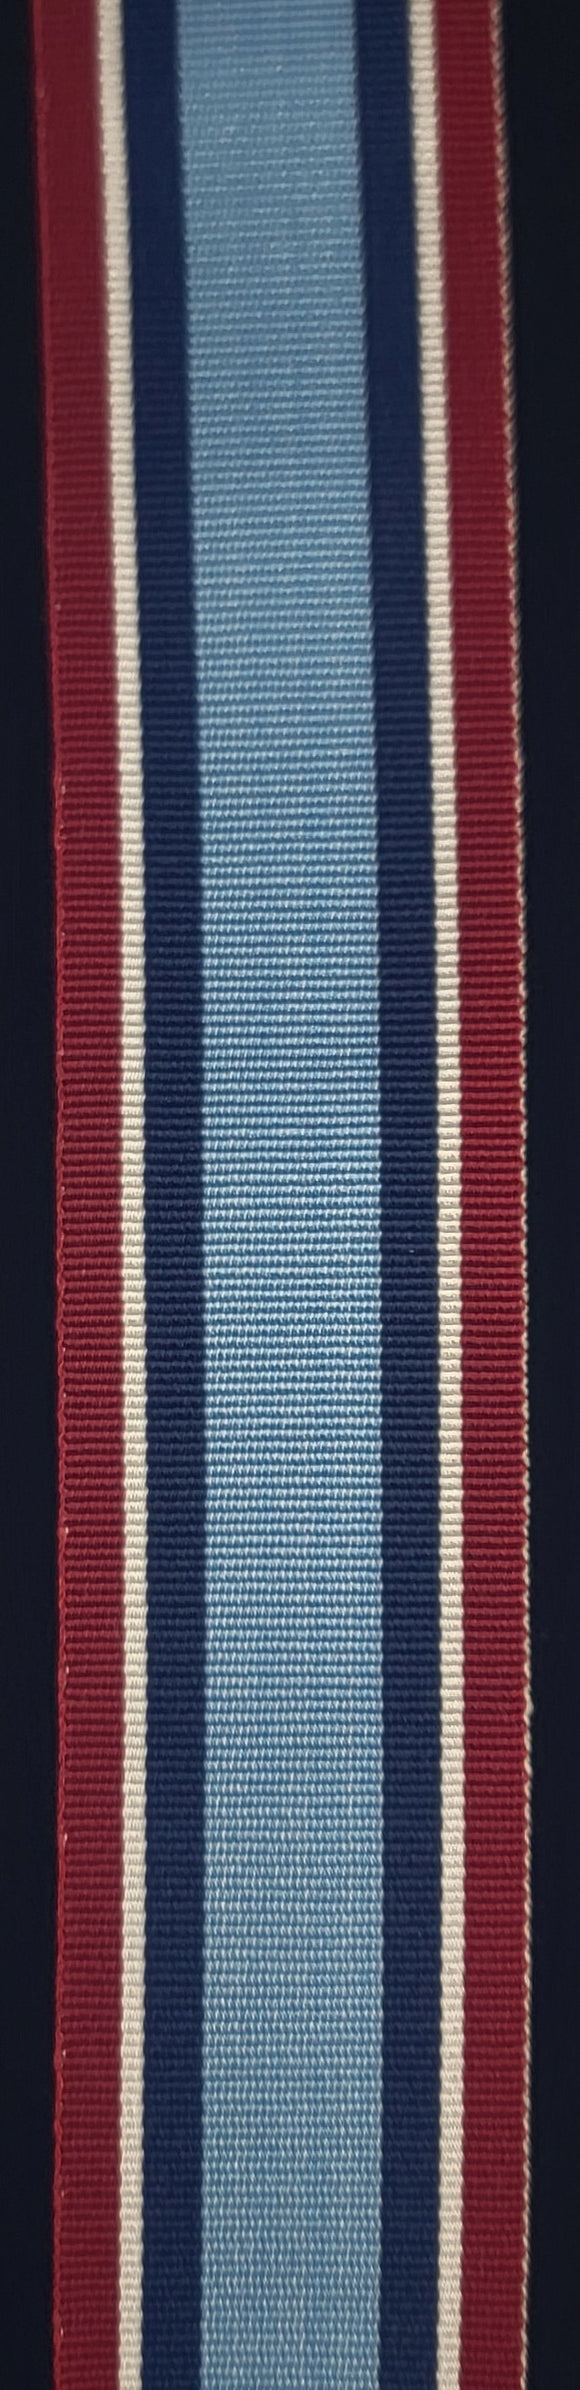 Ribbon, The Air Cadet League Volunteer Service Medal (VSM)